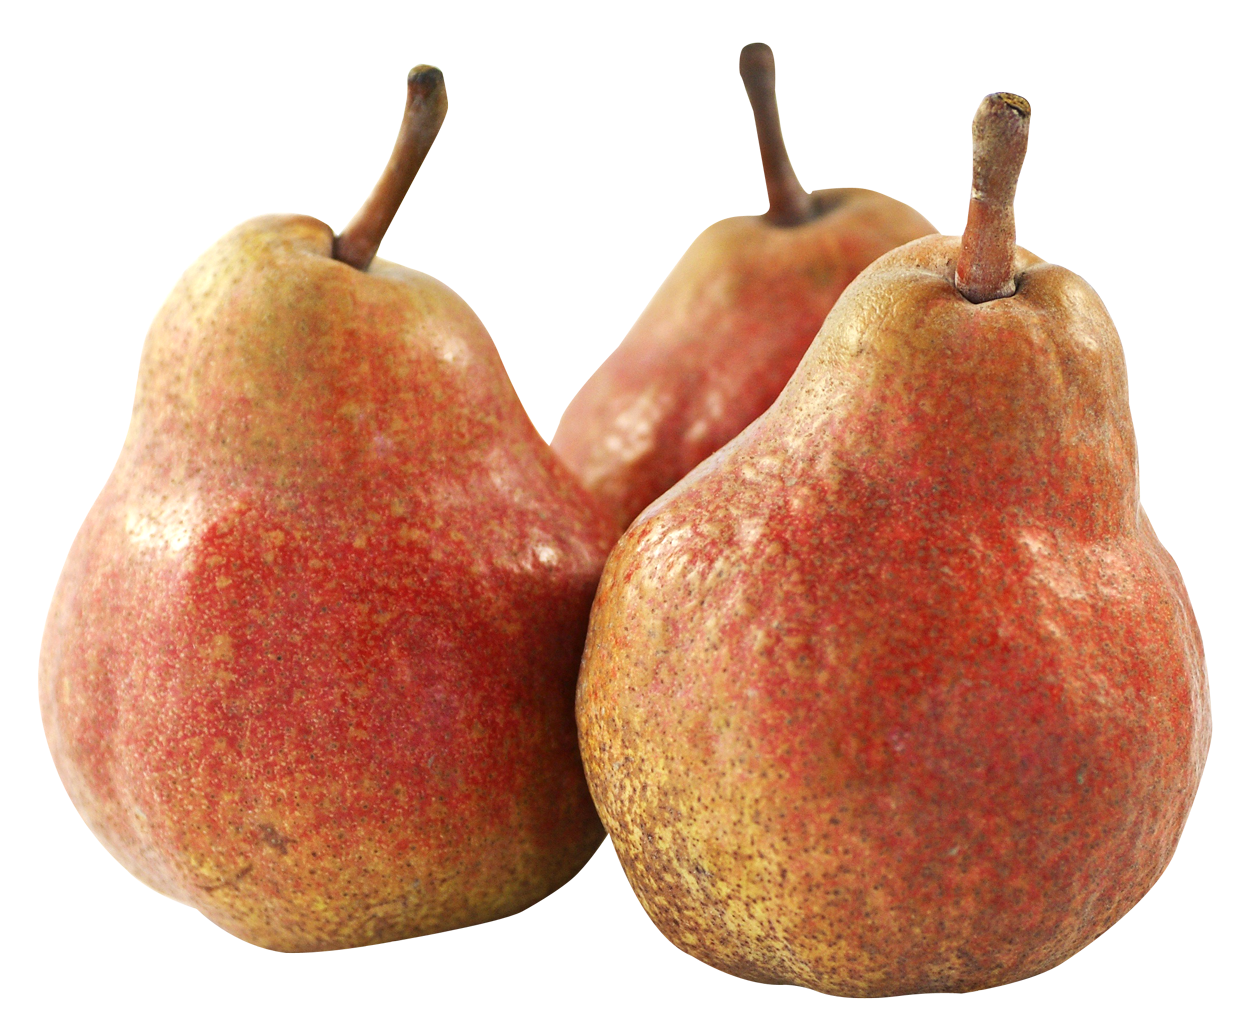 Pear Fruits